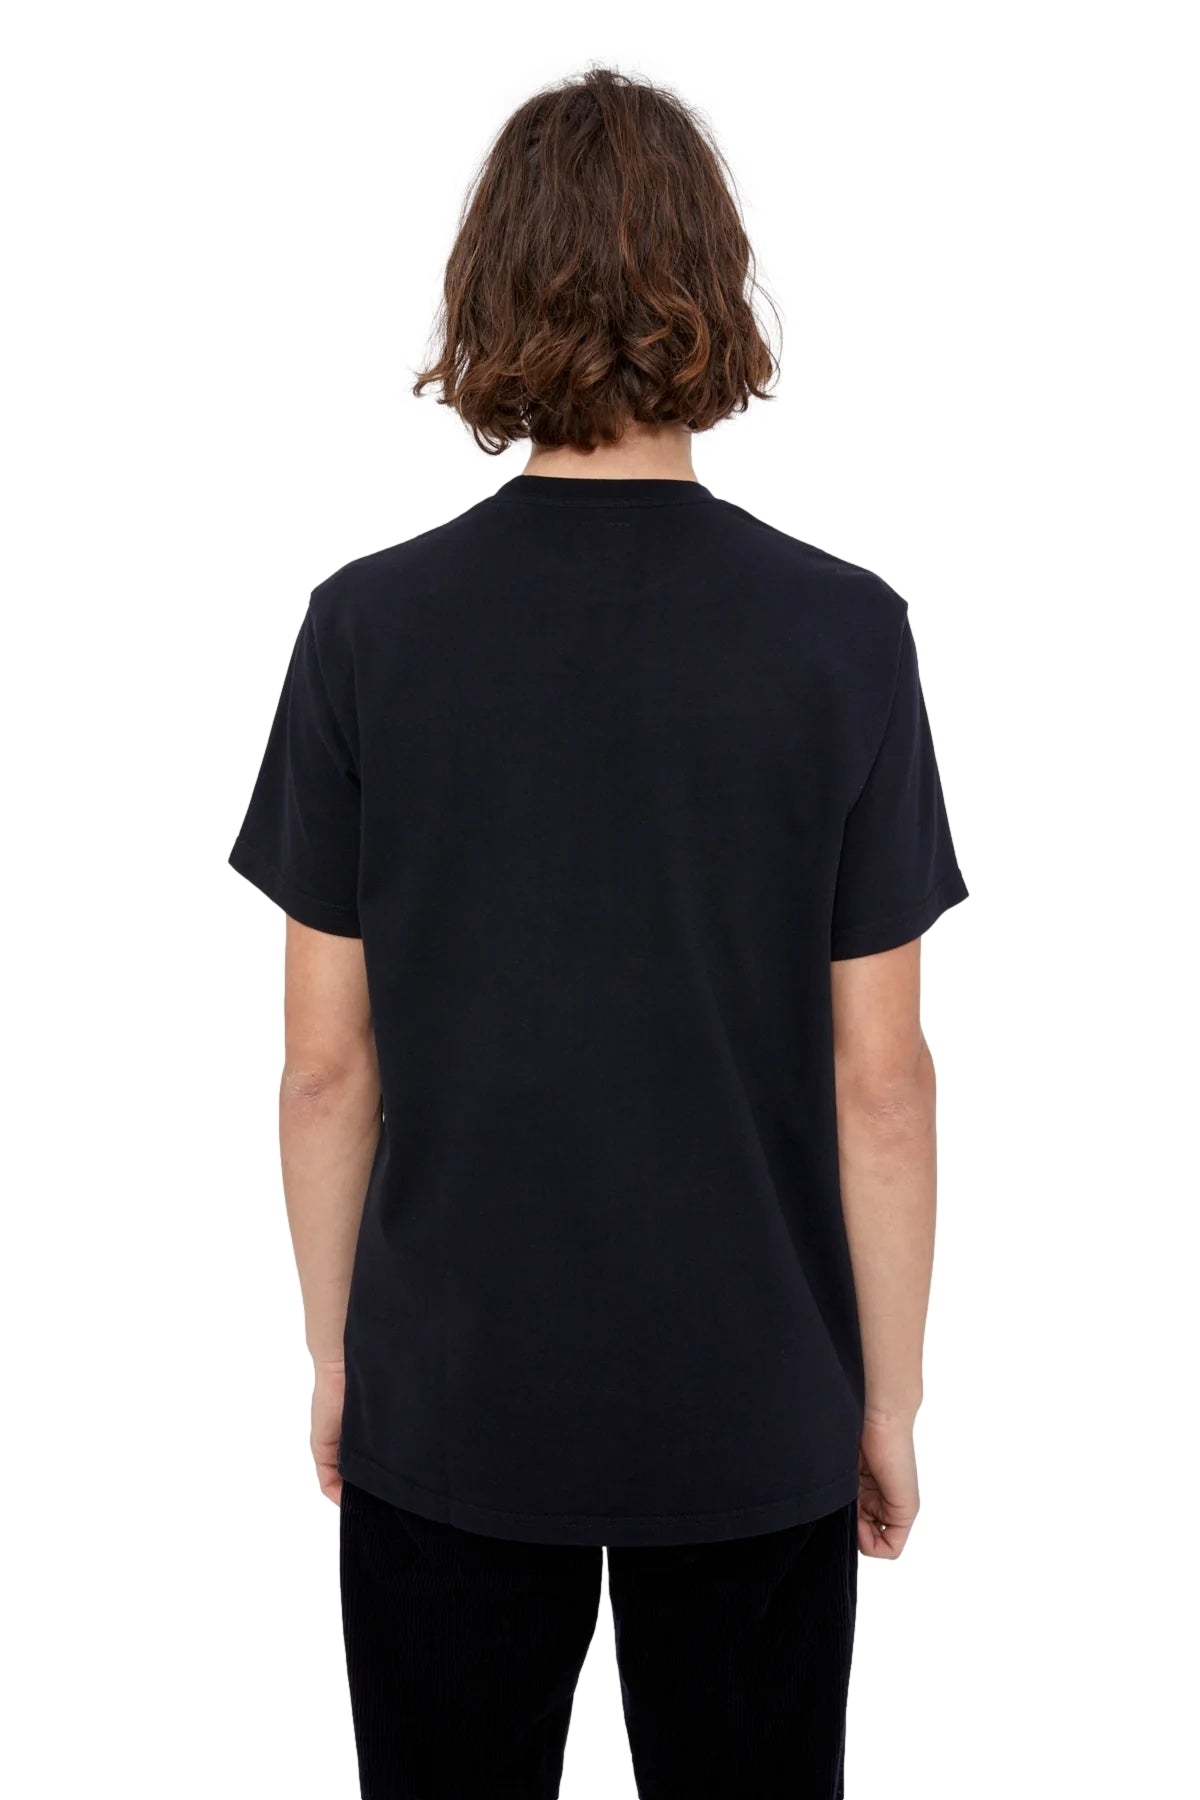 Livid Richmond 2-Pack Black T-shirt Sort - modostore.no